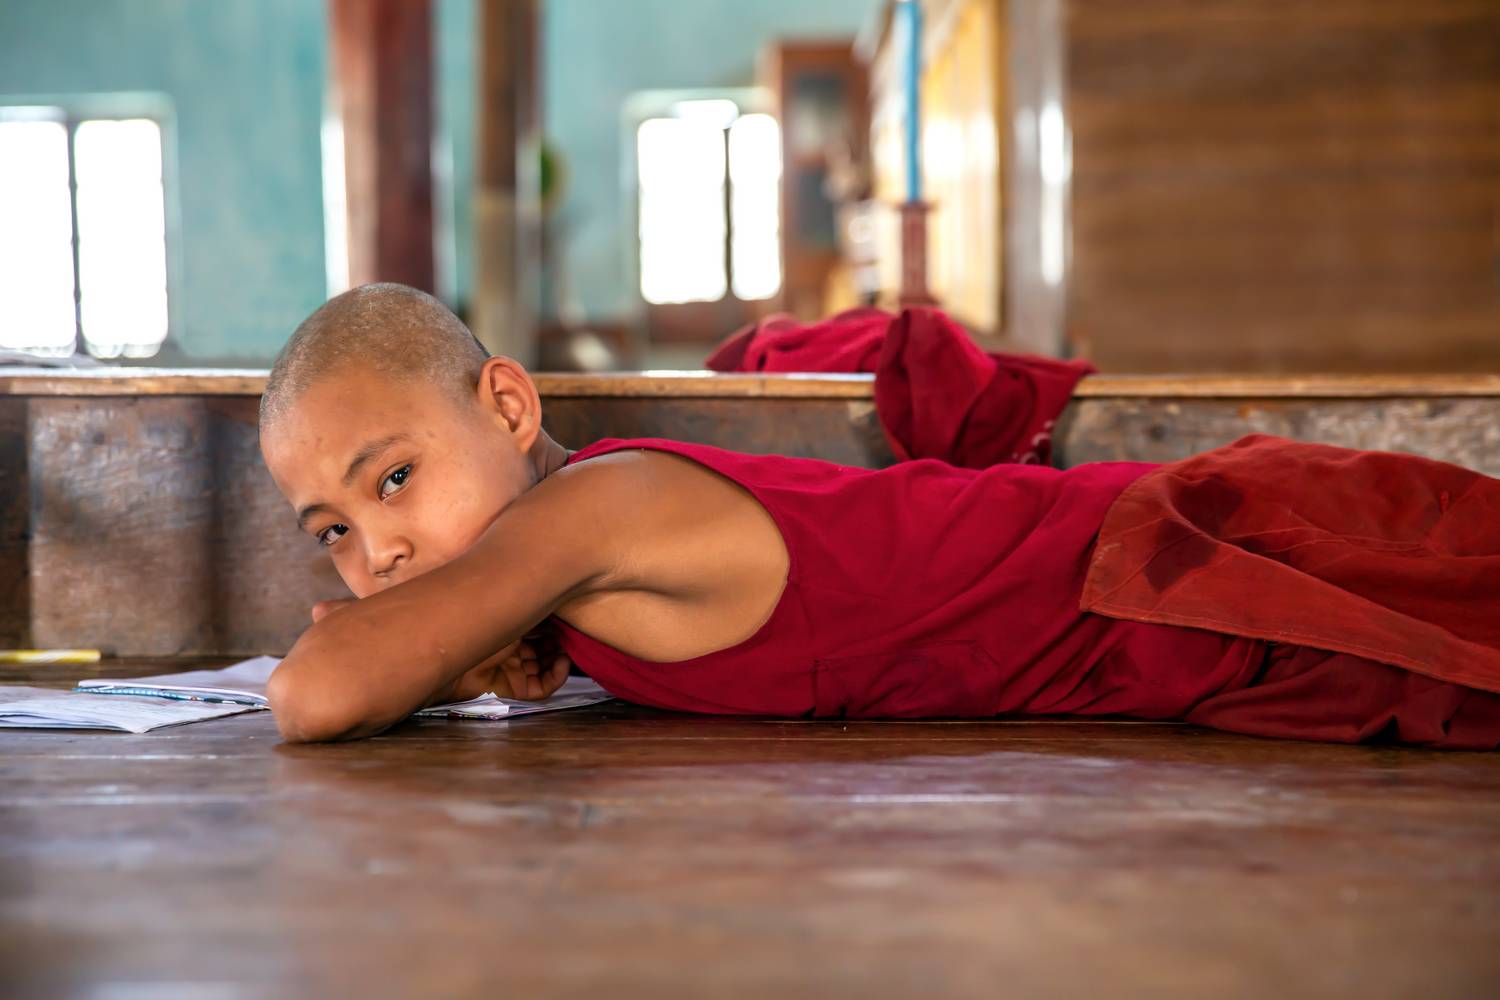 Buddhistischer Mönch in Myanmar, Asien van Miro May